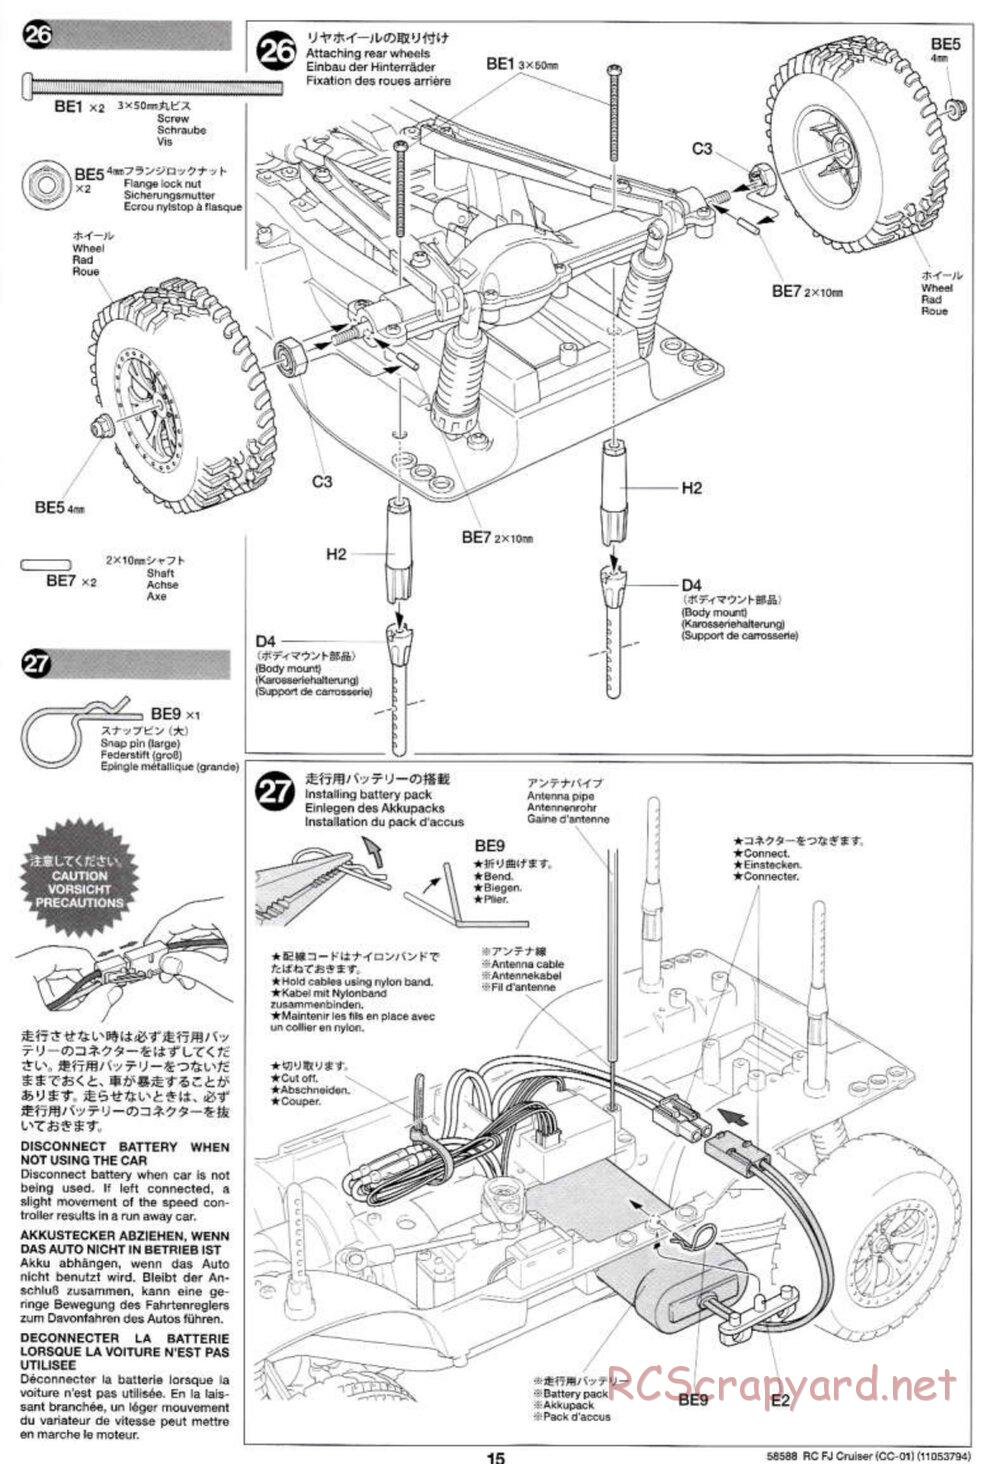 Tamiya - Toyota FJ Cruiser - CC-01 Chassis - Manual - Page 15